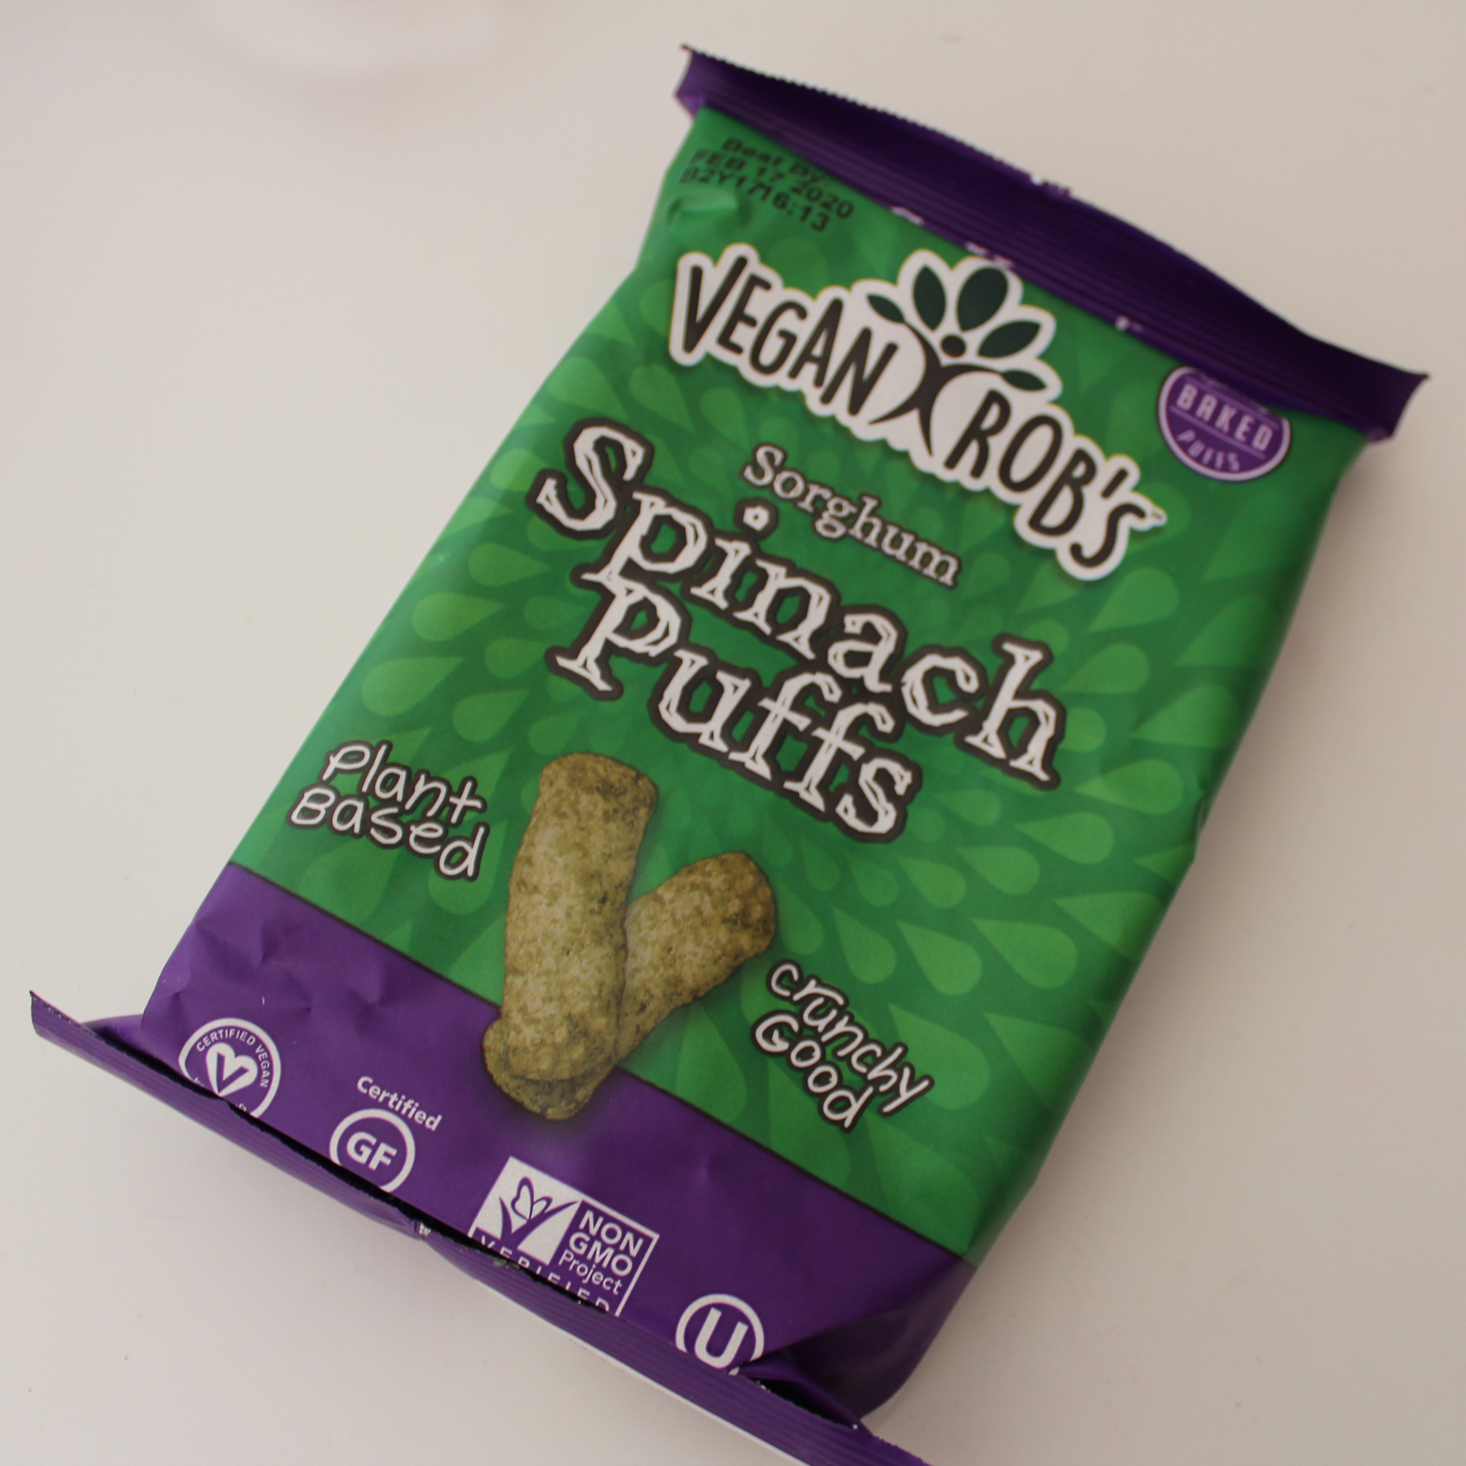 Vegan Cuts Snack September 2019 Spinach 1